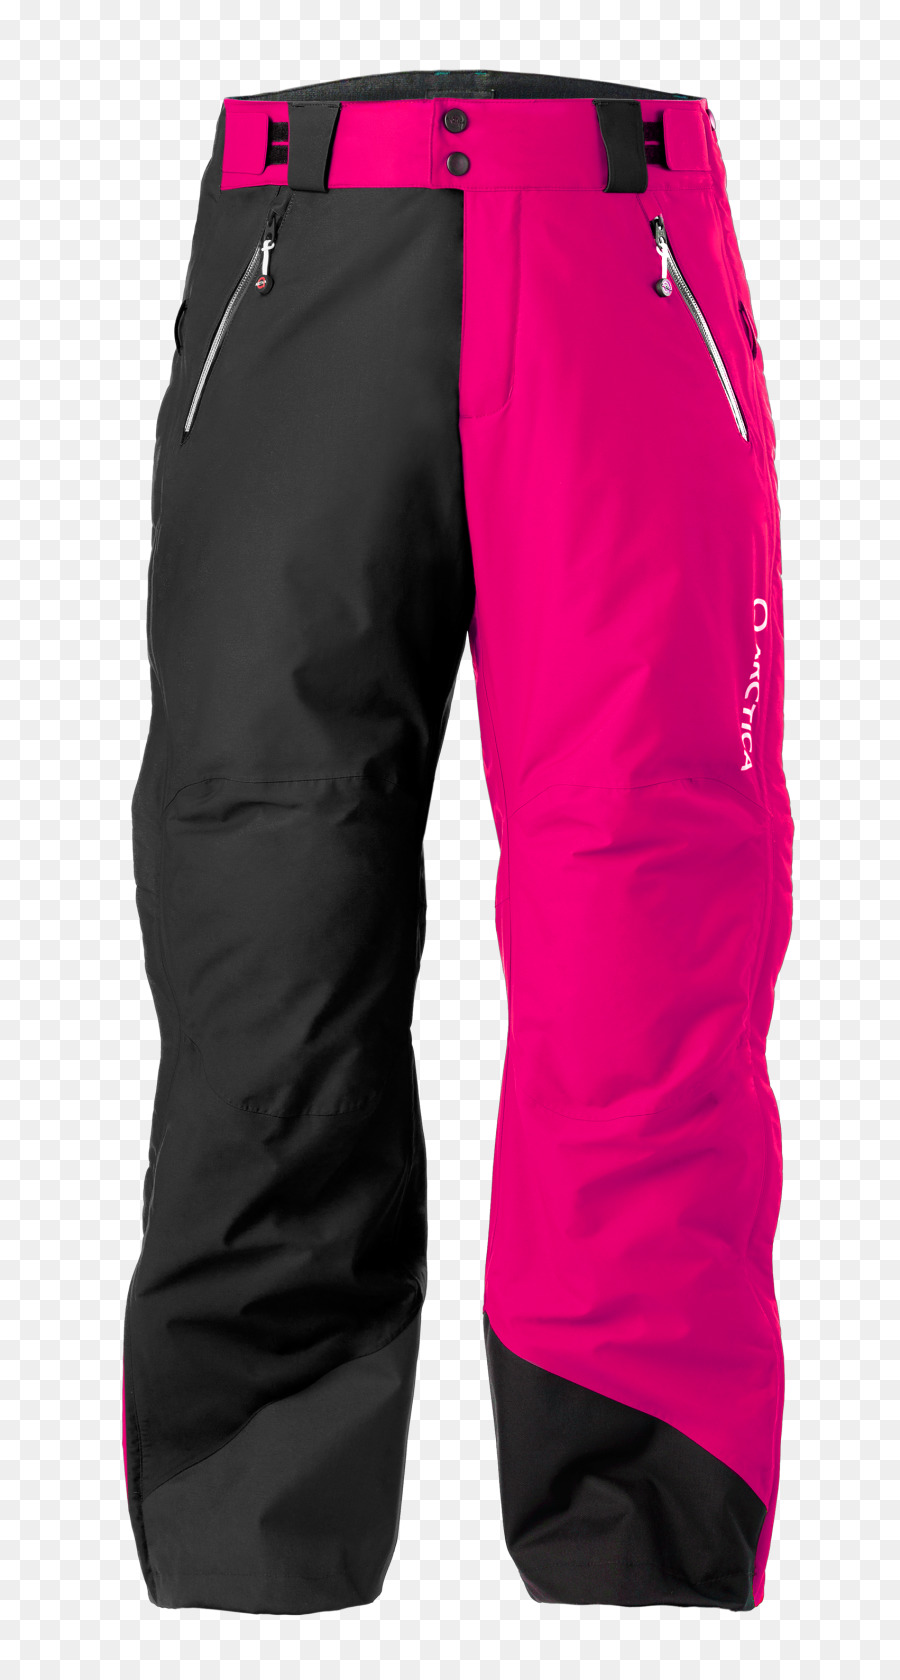 Pants Clothing Zipper Pink Shorts - pants zipper png download - 846*1680 - Free Transparent Pants png Download.